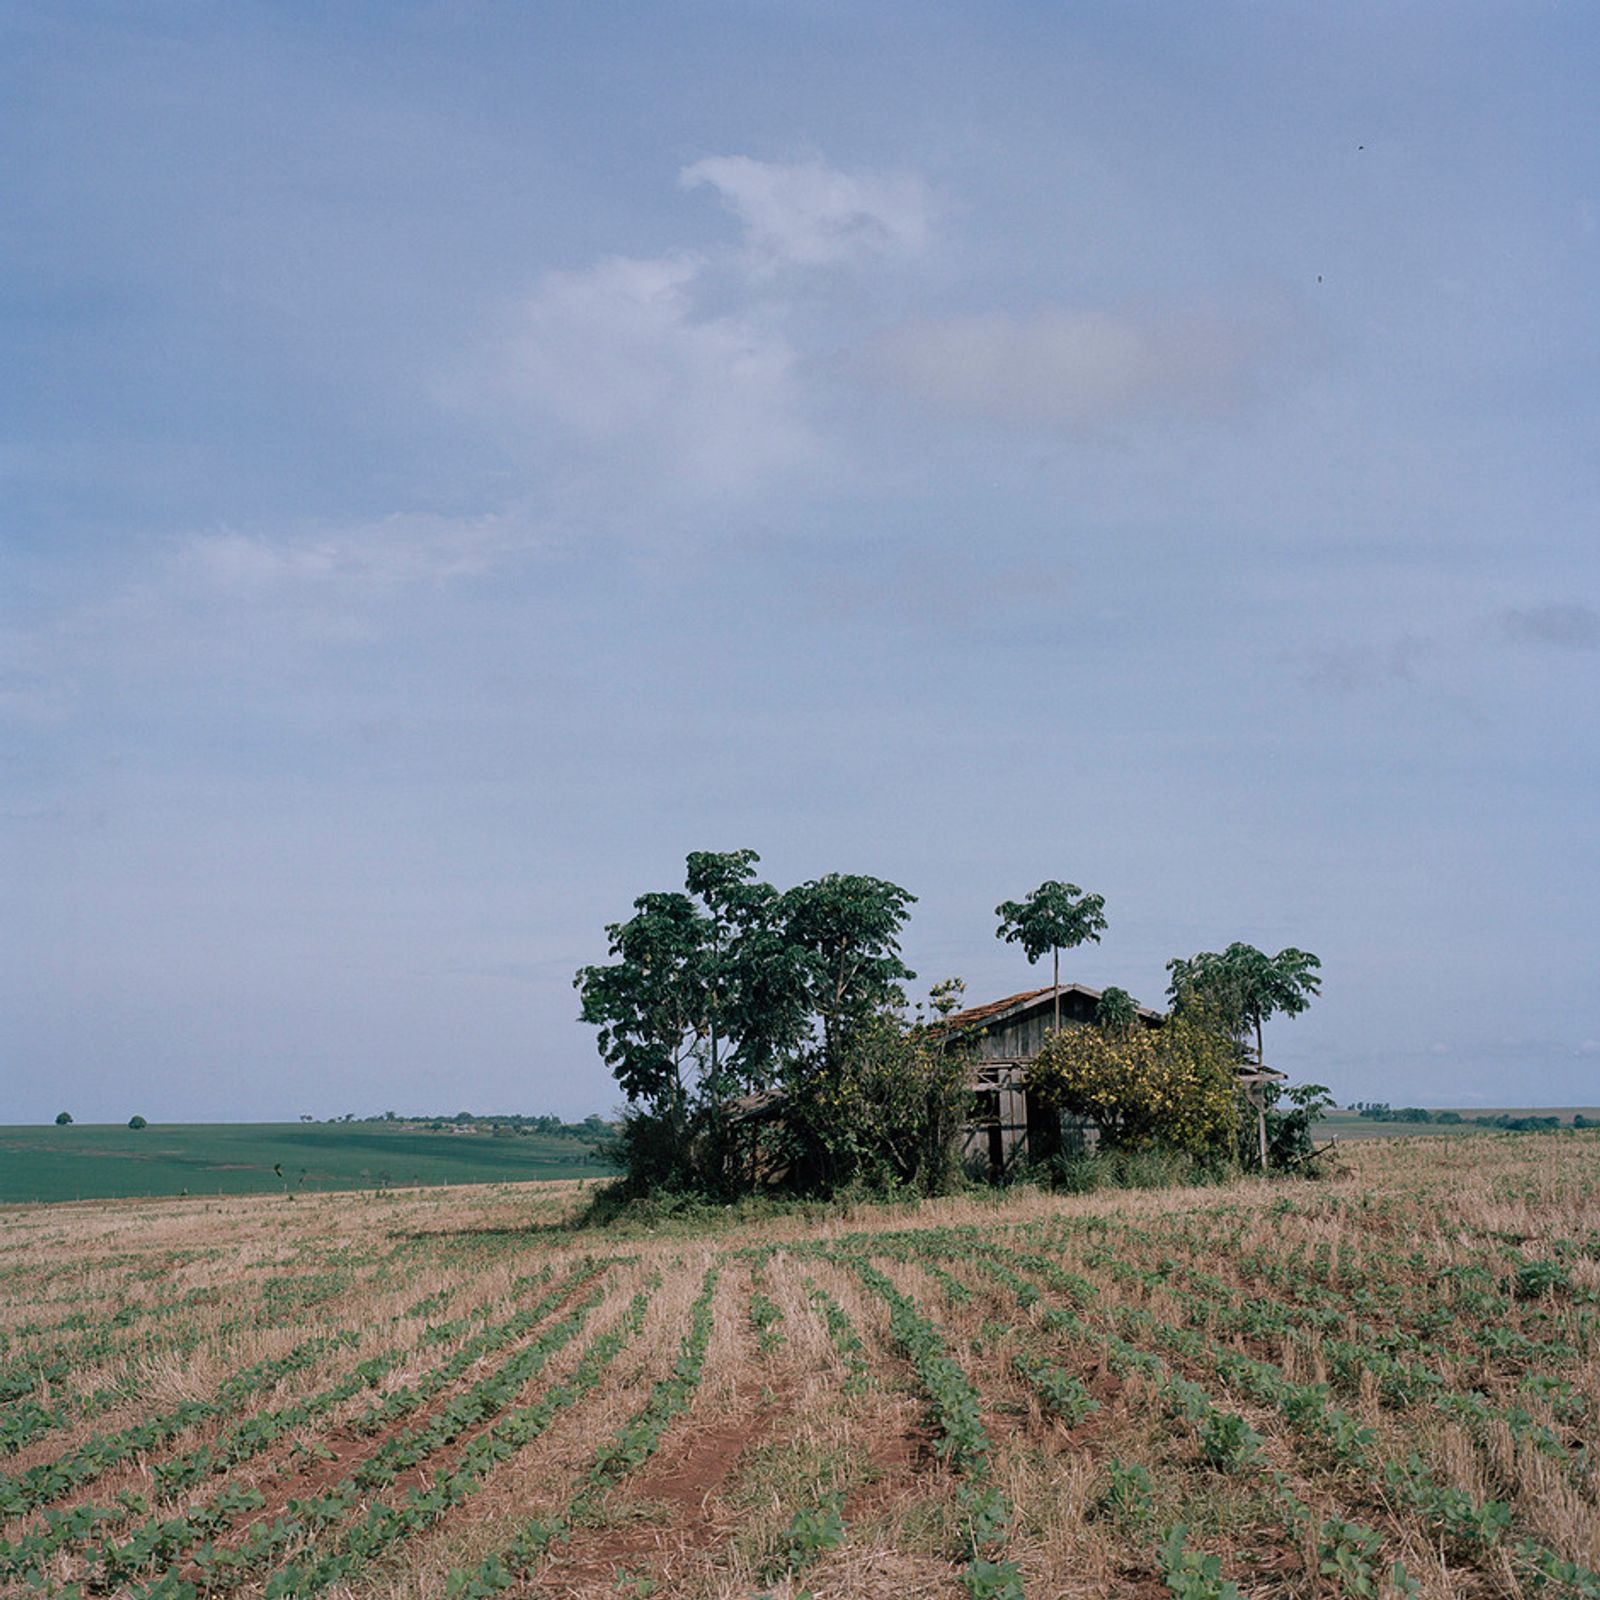 © Jordi Ruiz Cirera - Image from the Paraguay's Land Struggle photography project